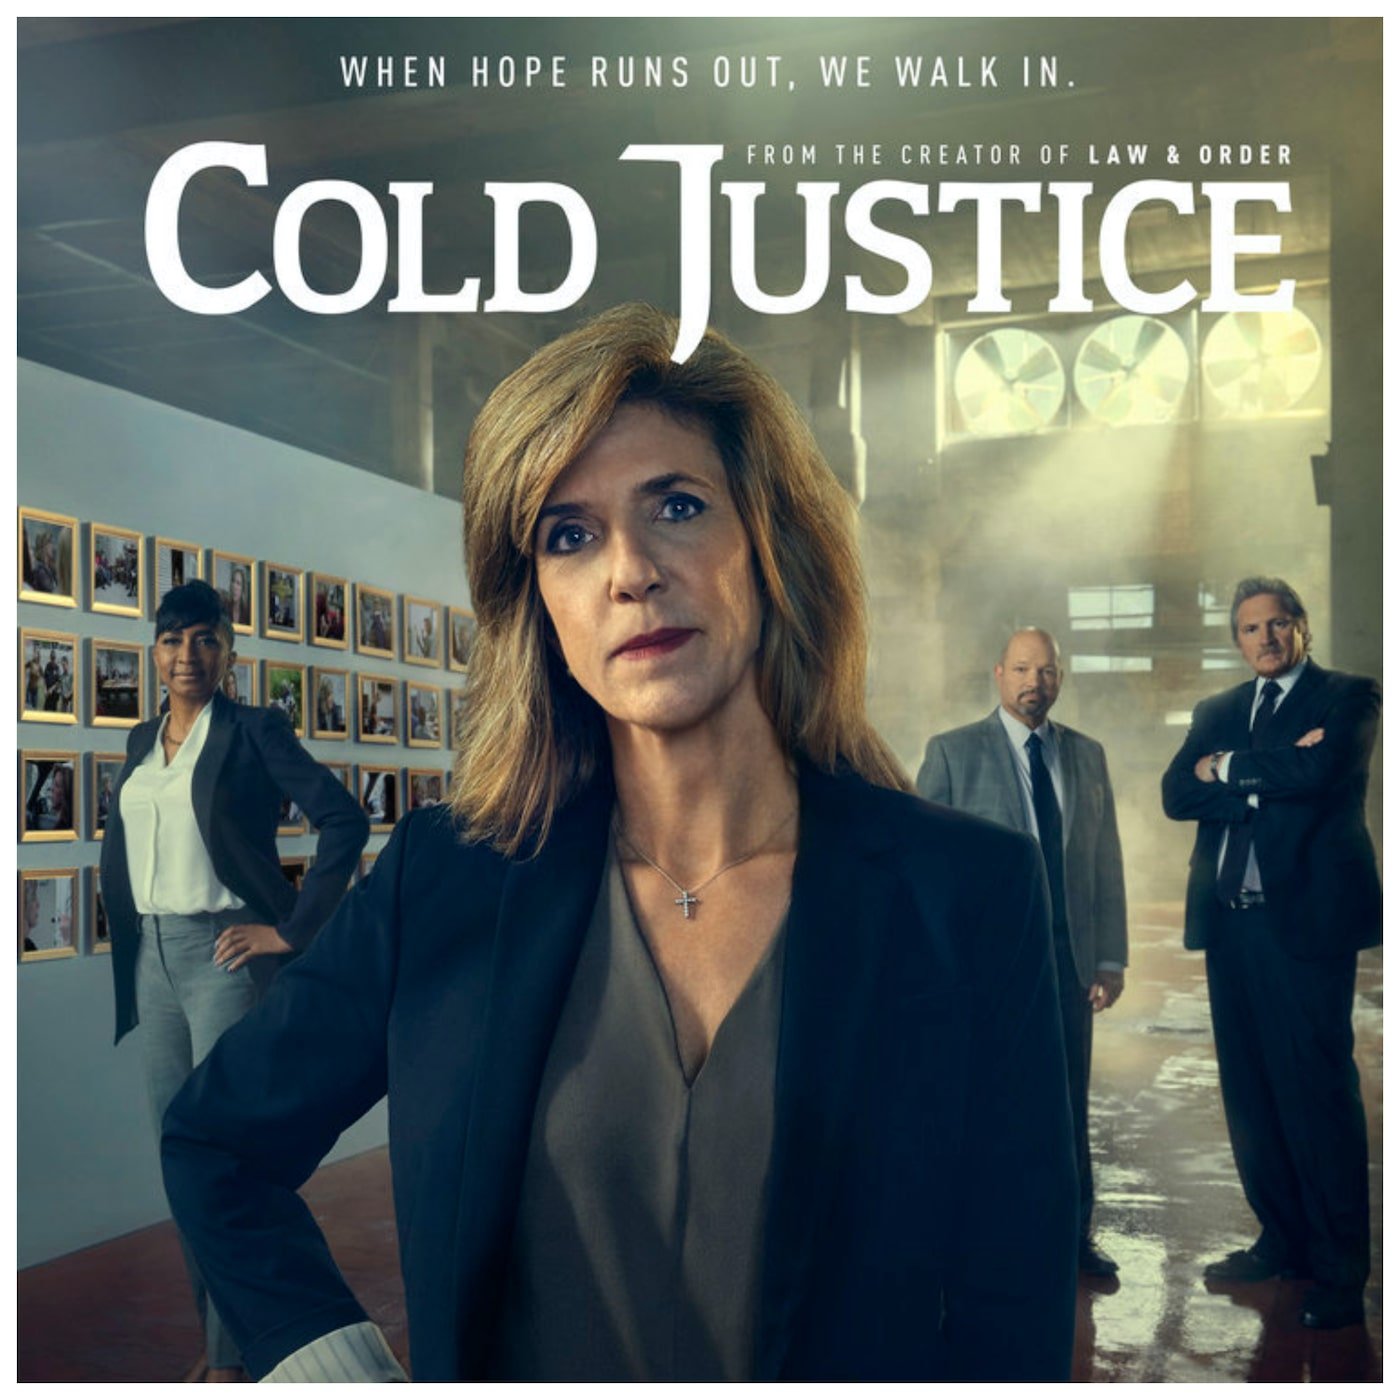 'Cold Justice' key art featuring investigator Kelly Siegler. 